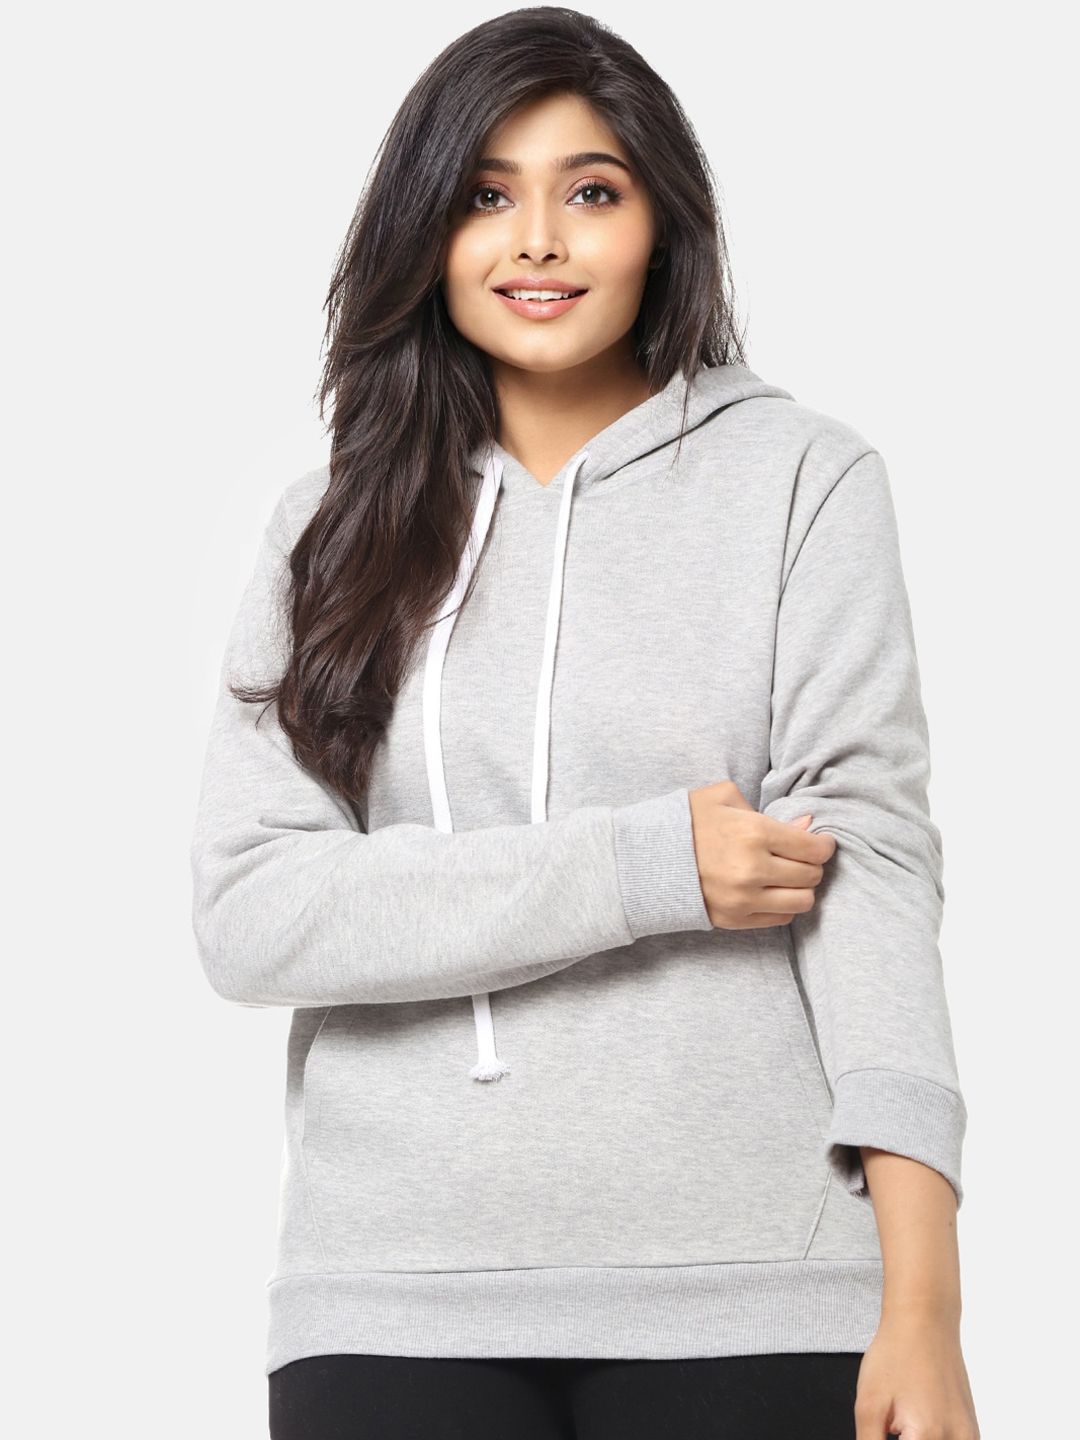 Instafab Plus Women Grey Solid Hooded Sweatshirt Price in India